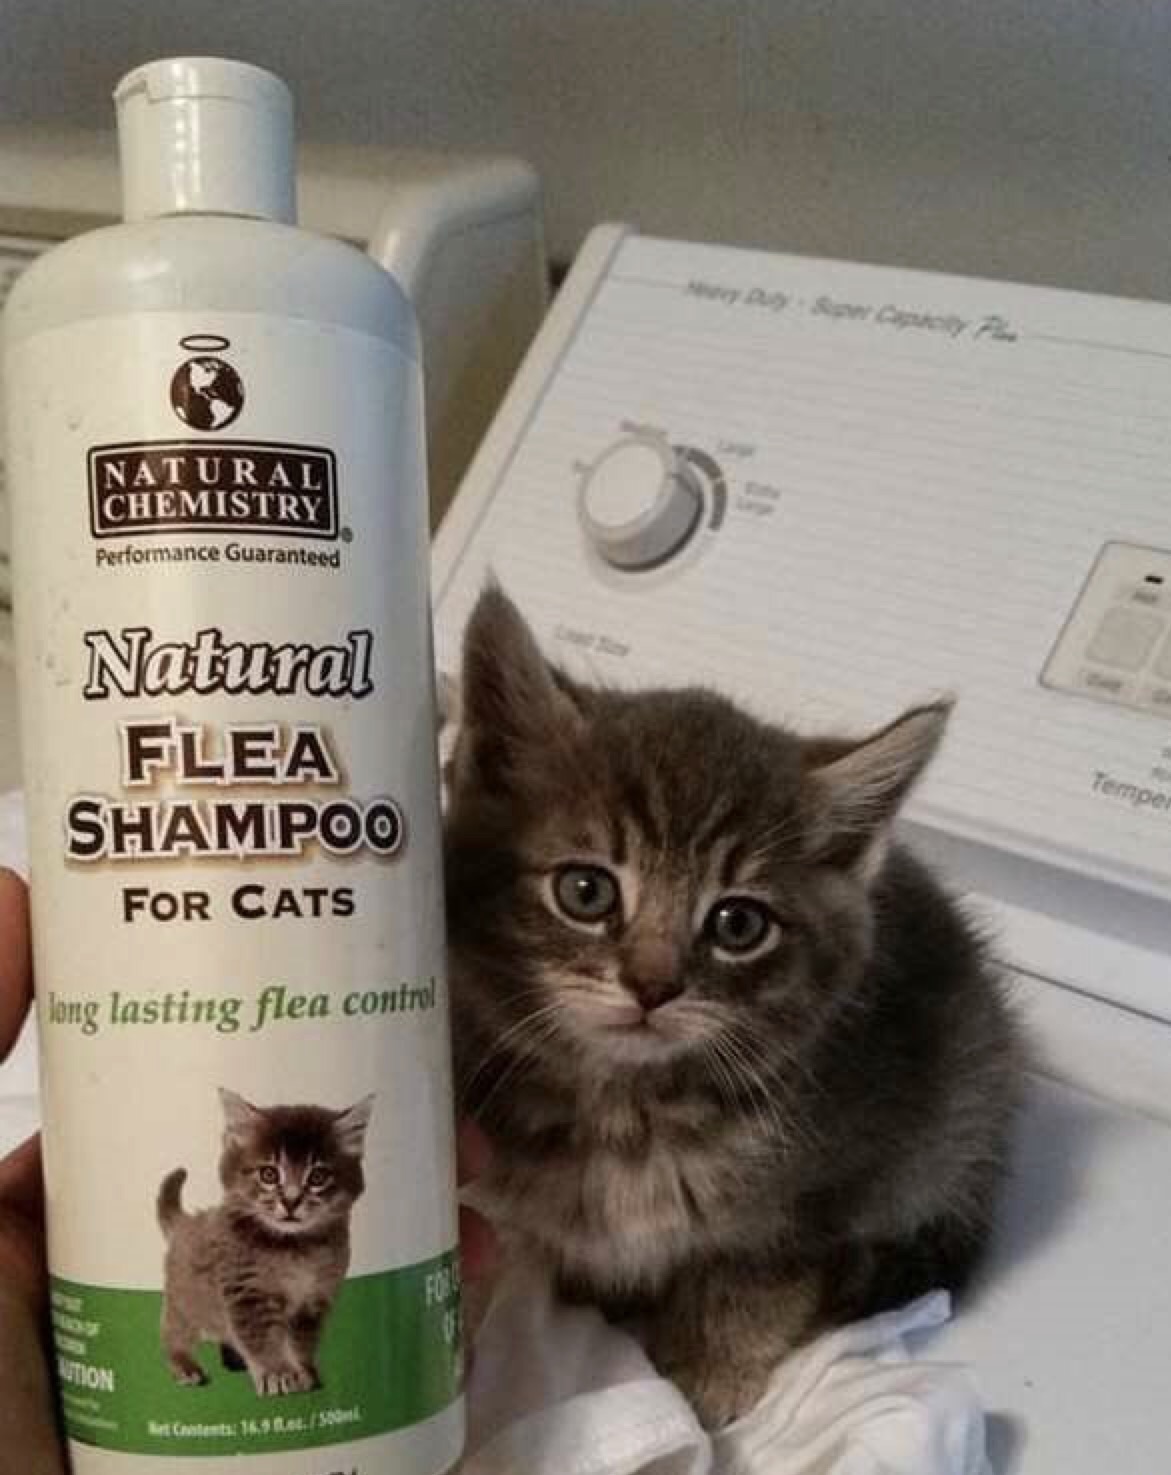 Kitten - Natural Chemistry Performance Guaranteed Natural Flea Shampoo For Cats long lasting flea control Bet Calents16.5 ft.